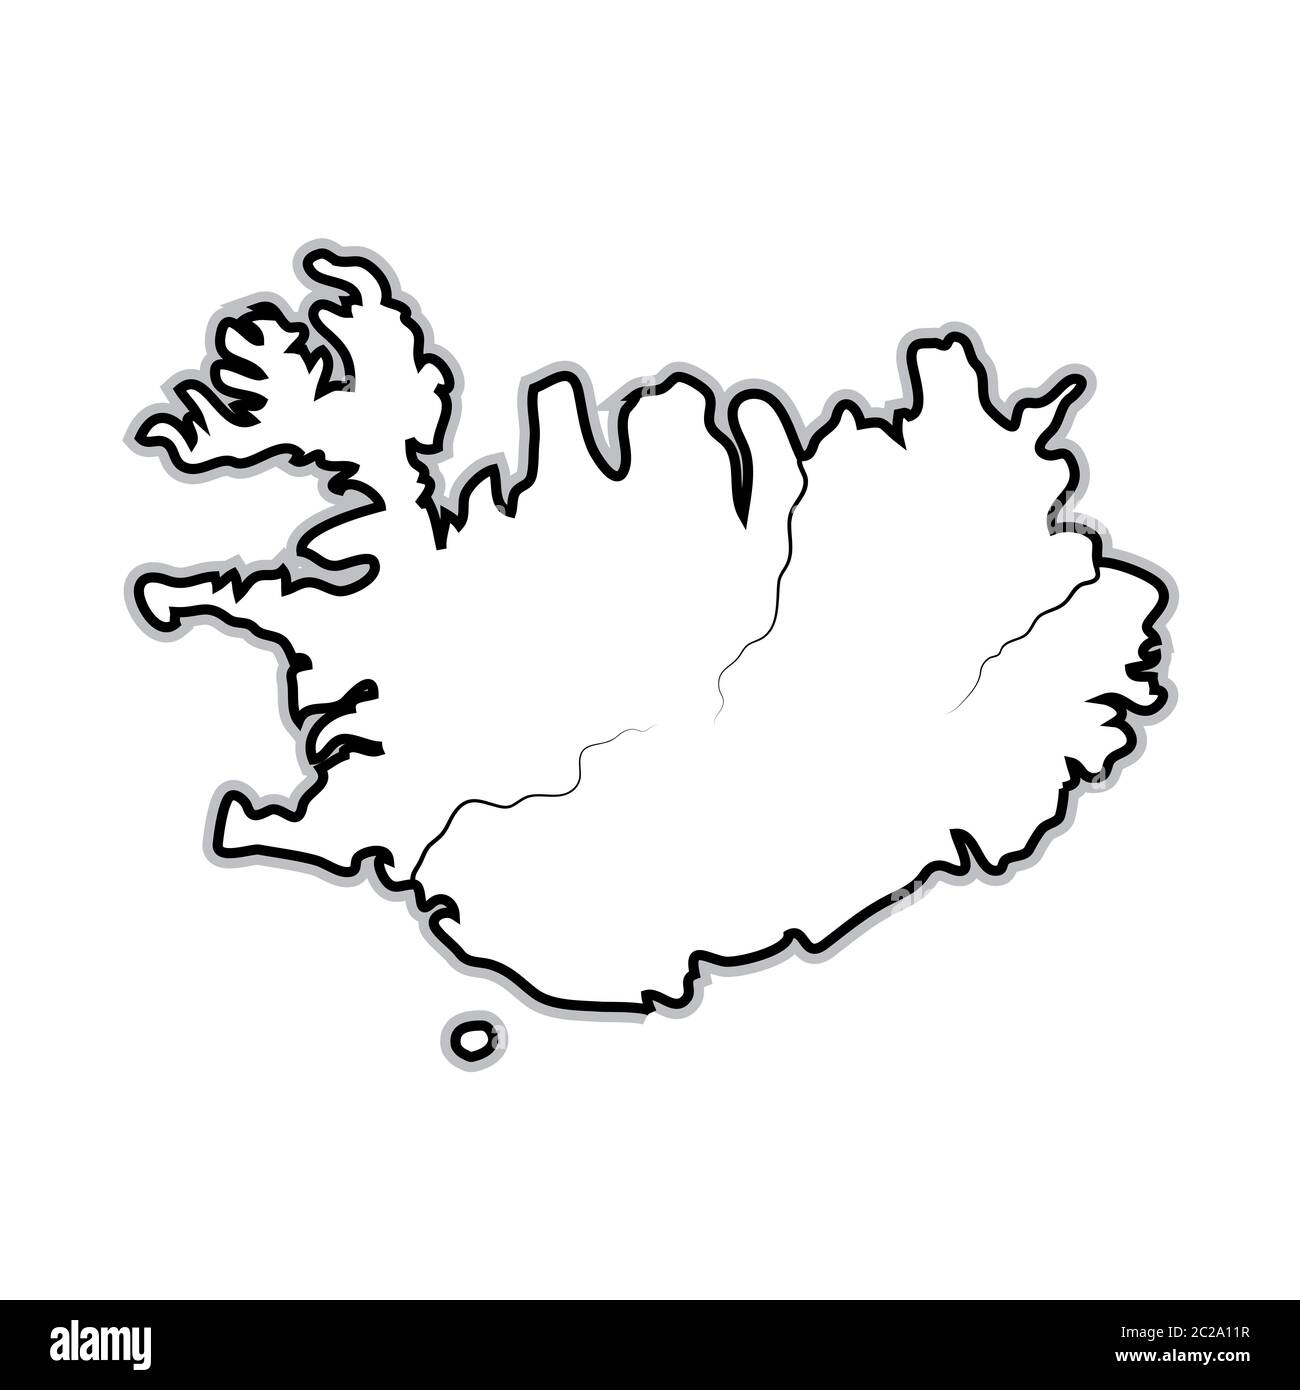 Mappa mondiale DELL'ISLANDA: Islanda, Scandinavia, Europa del Nord, Oceano Atlantico. Grafico geografico. Foto Stock